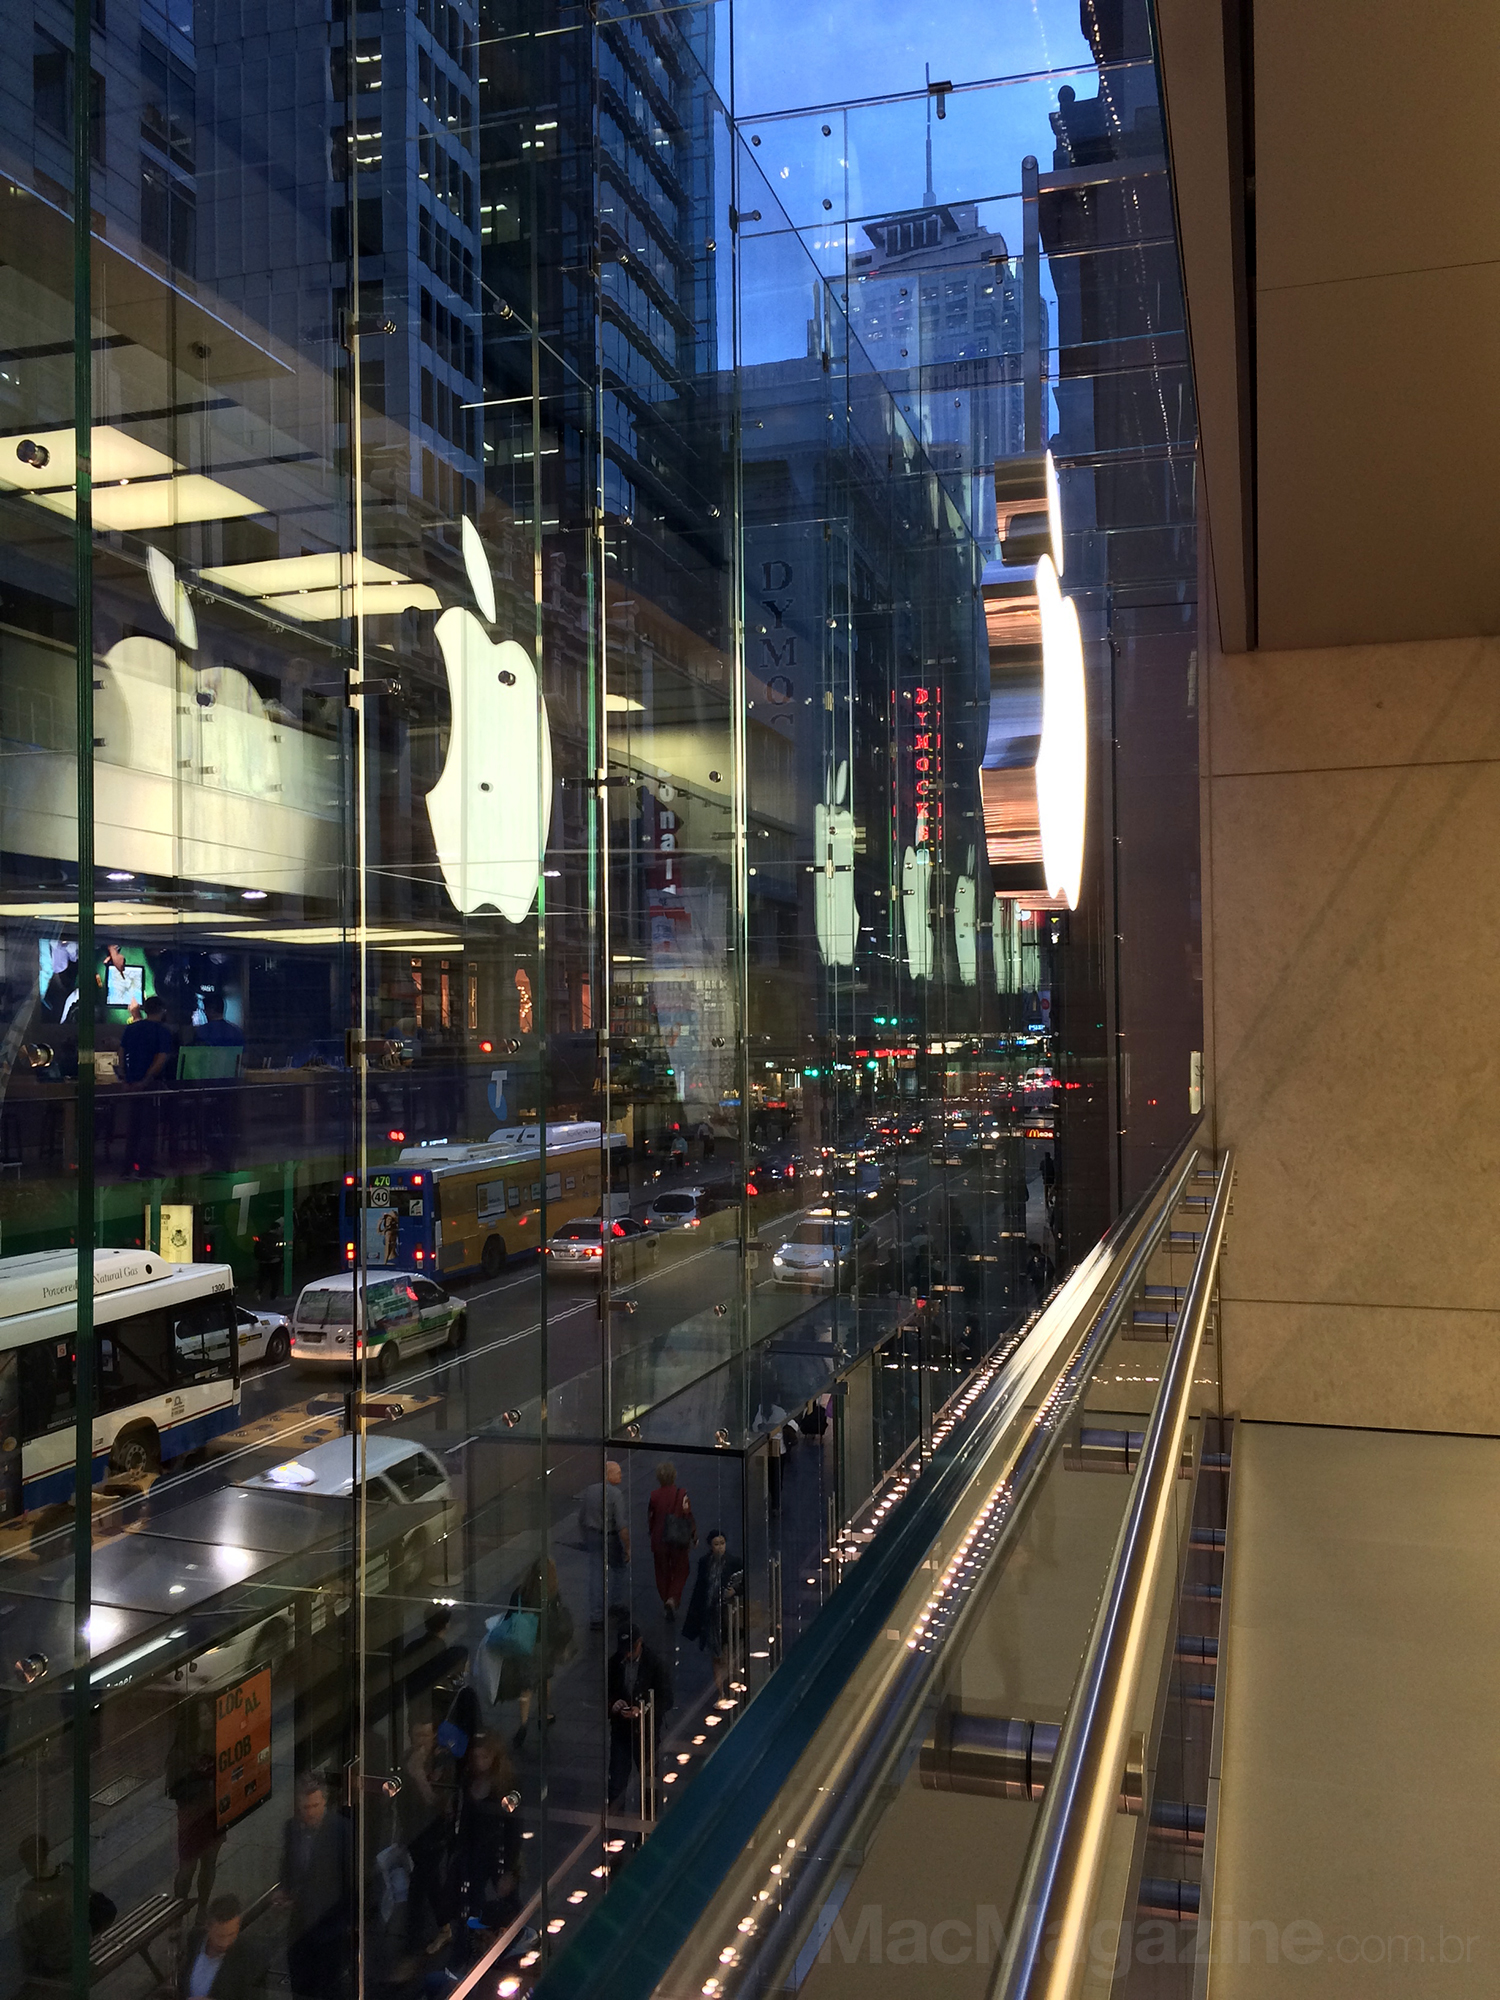 Apple Store - Sydney